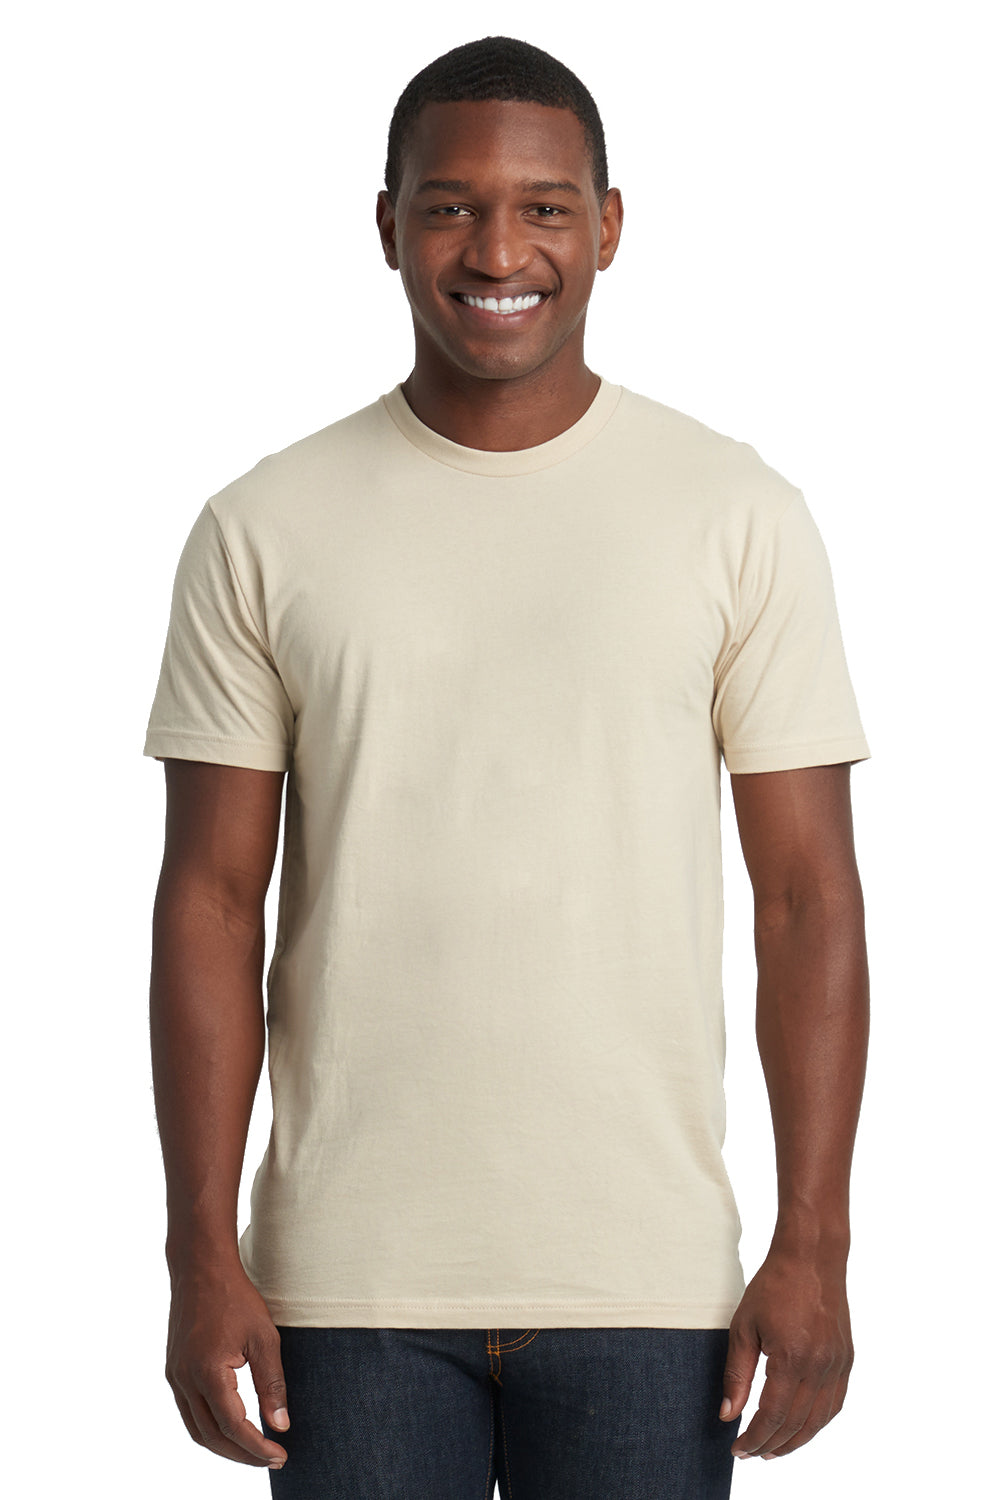 Next Level 3600 Mens Fine Jersey Short Sleeve Crewneck T-Shirt Cream Front